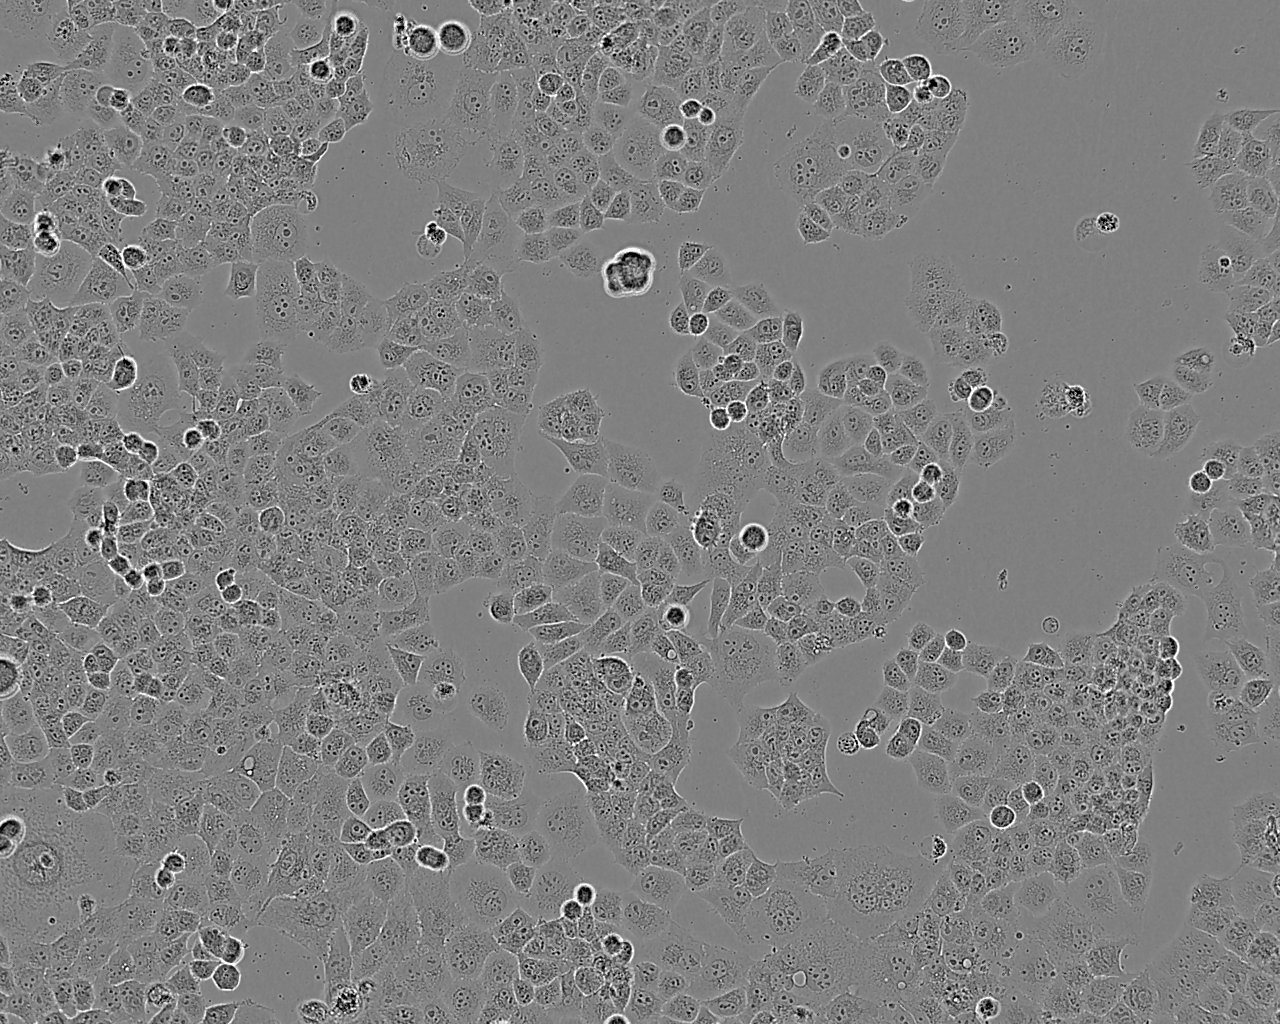 SMA-560 Cell:小鼠星形胶质瘤细胞系,SMA-560 Cell